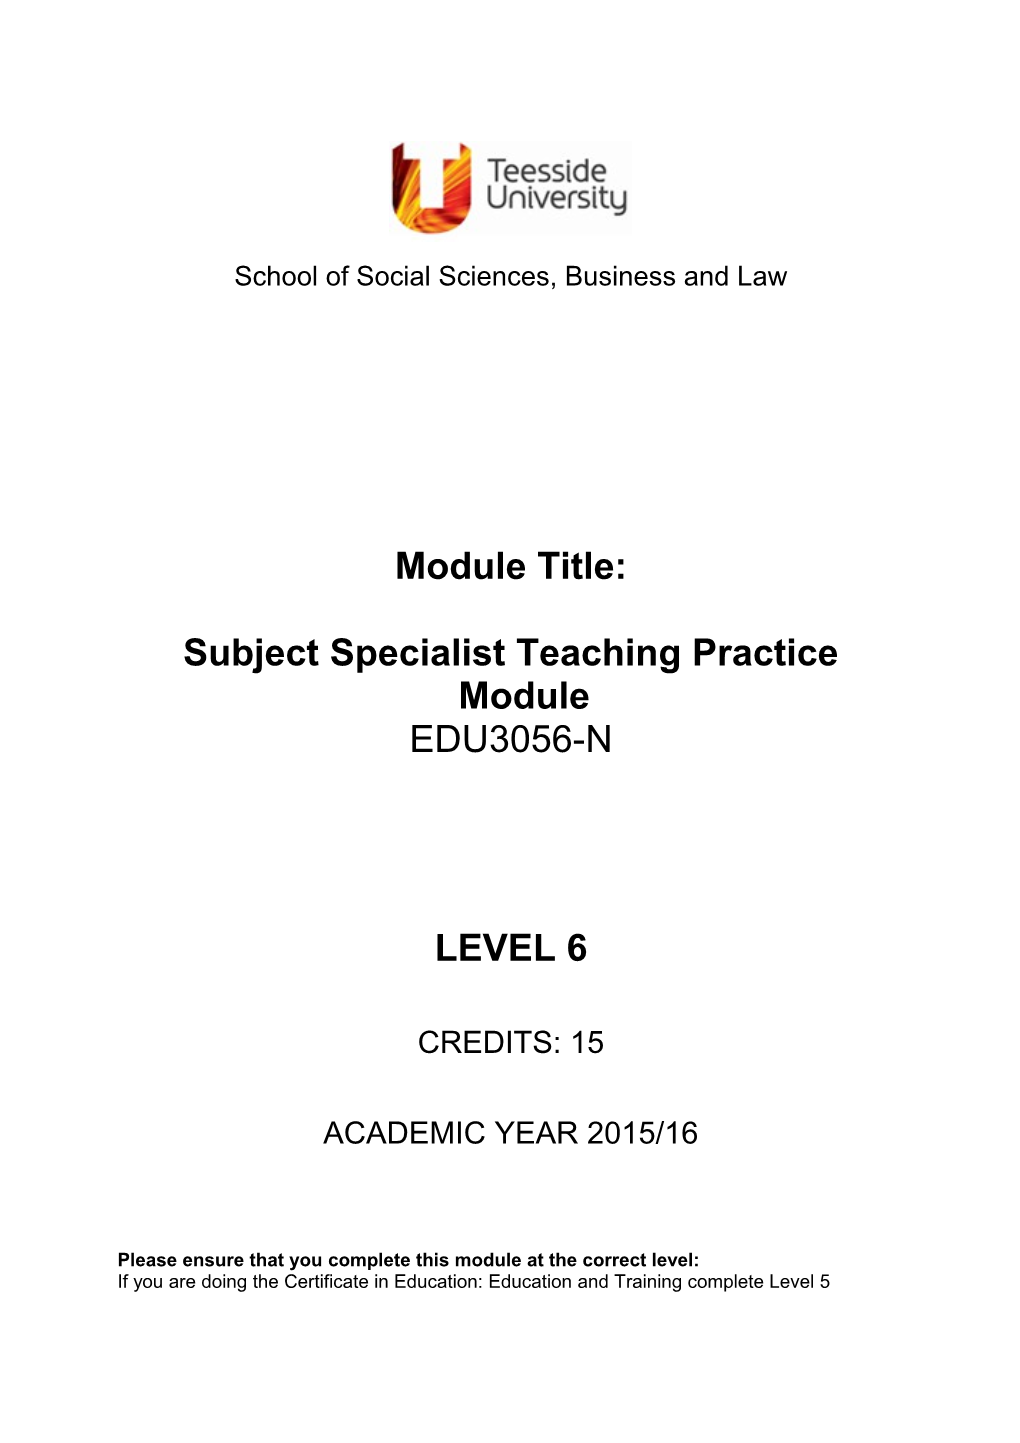 Subject Specialist Teaching Practice Module